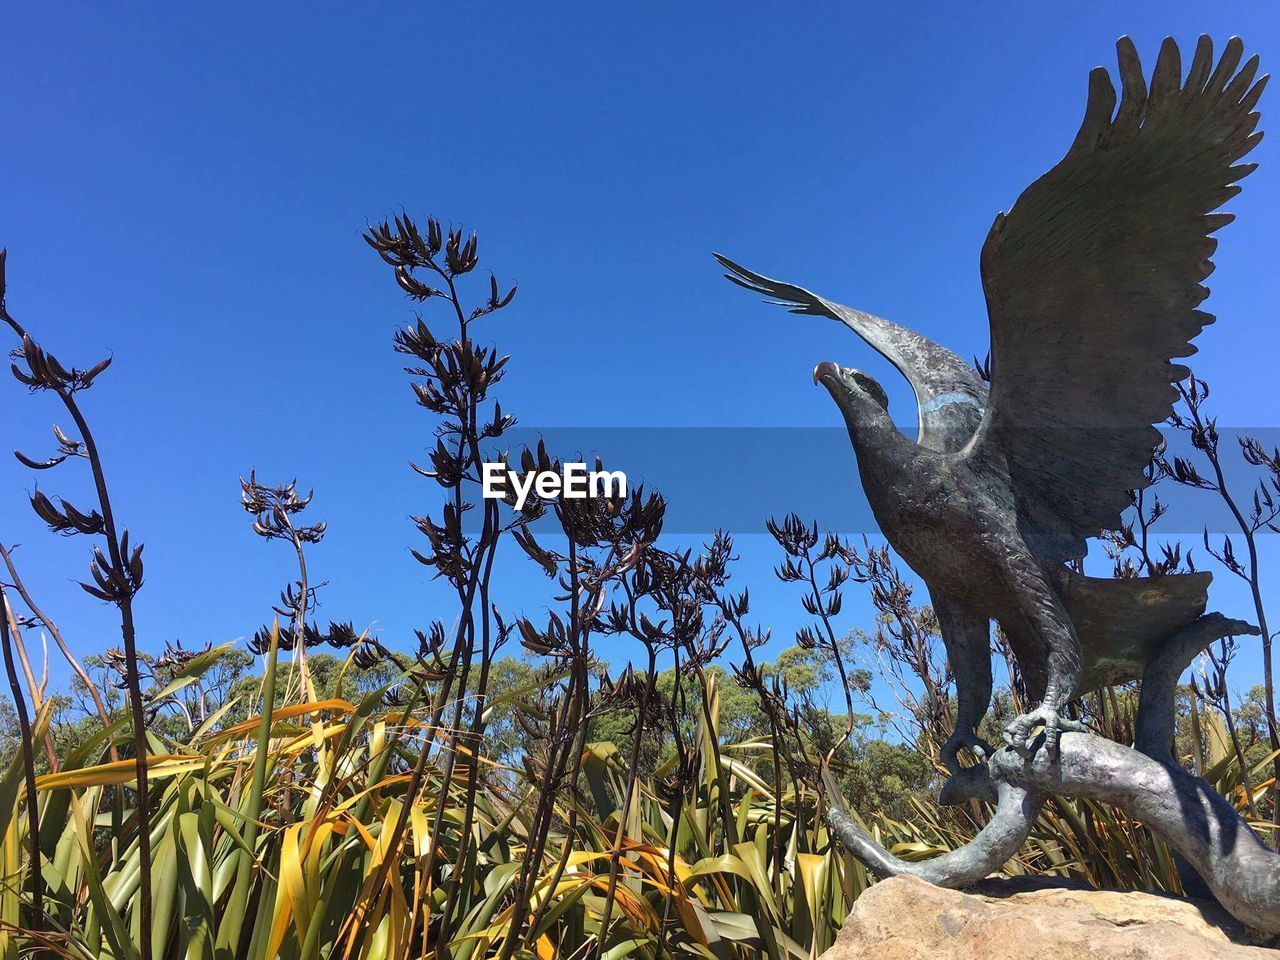 Bird statue against blue sky